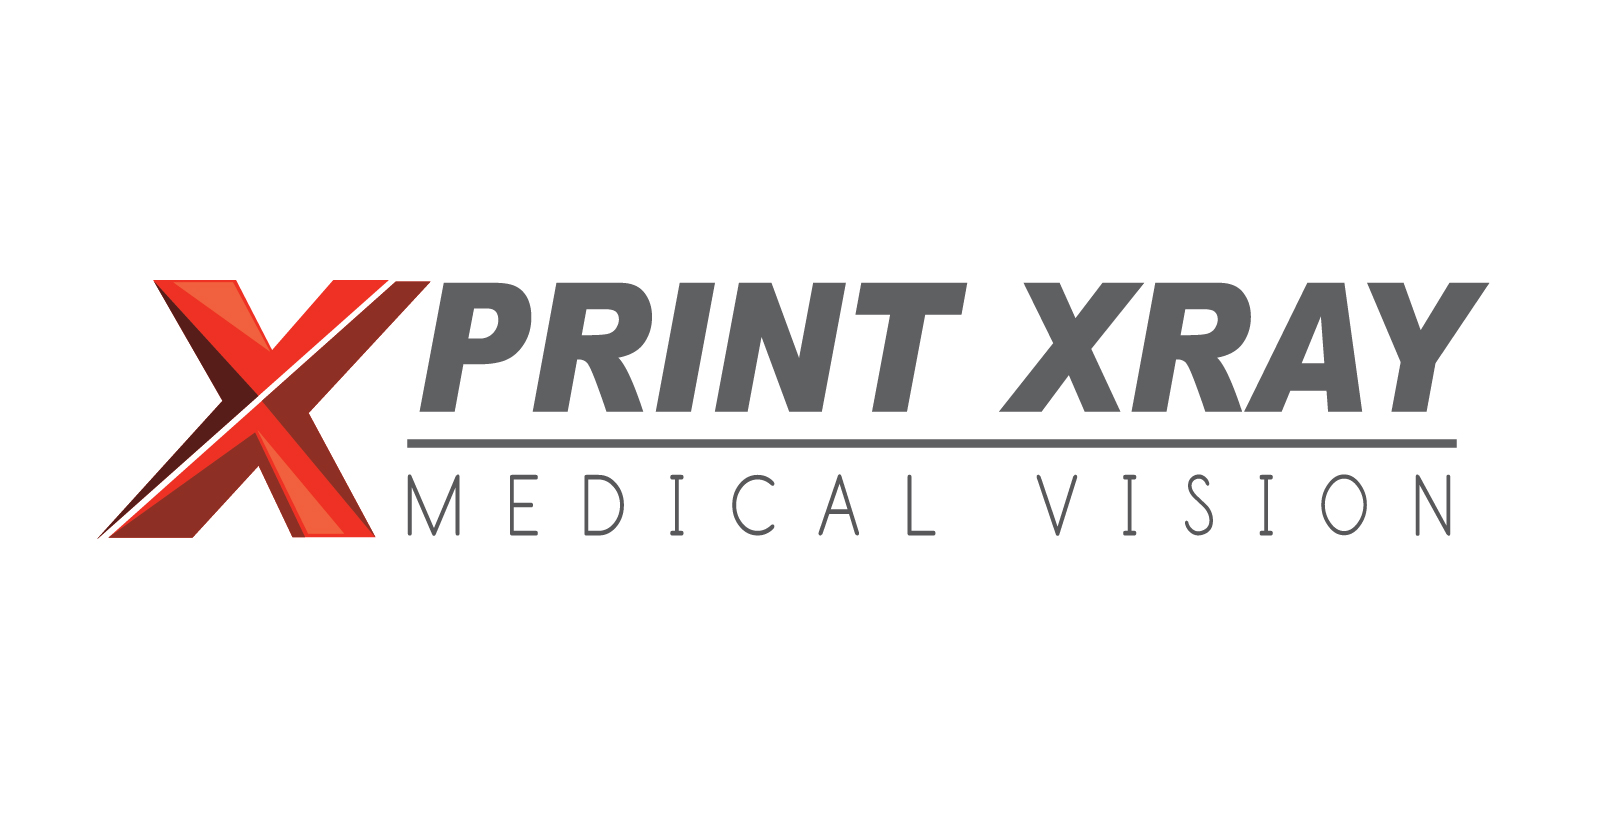 printXray Medical Vision logo